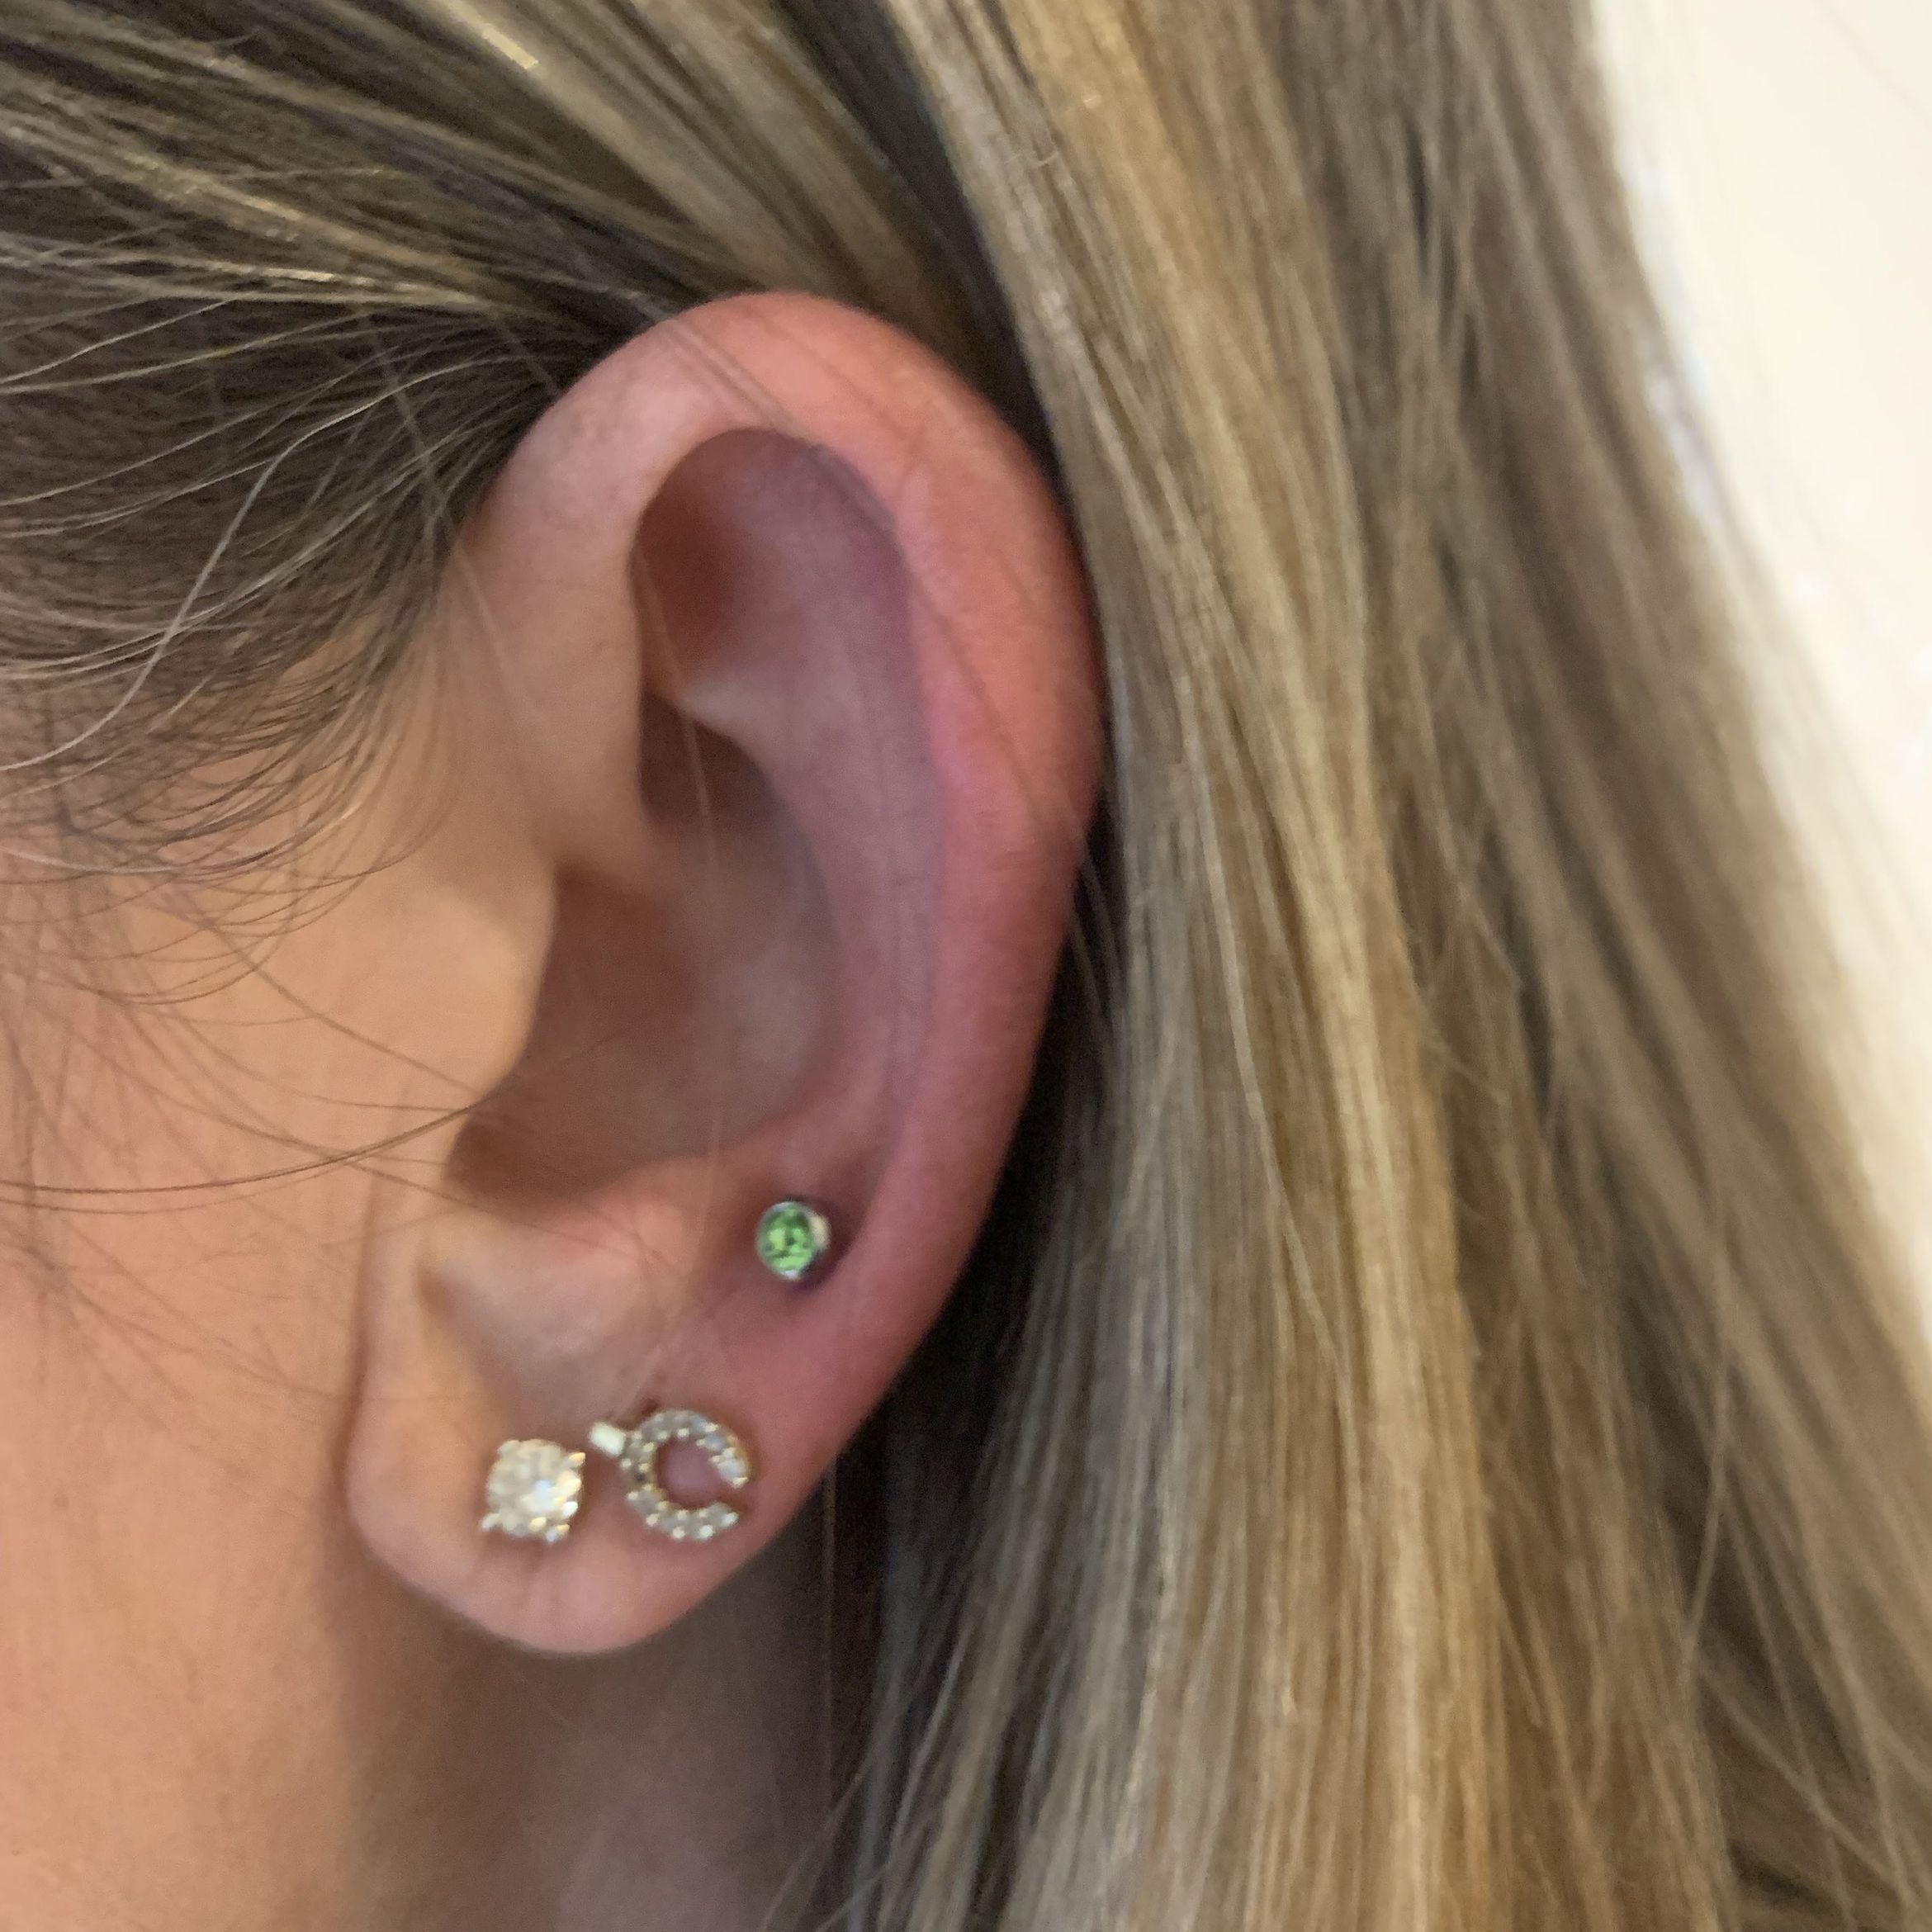 Ear Lobe / Cartilage Piercing portfolio